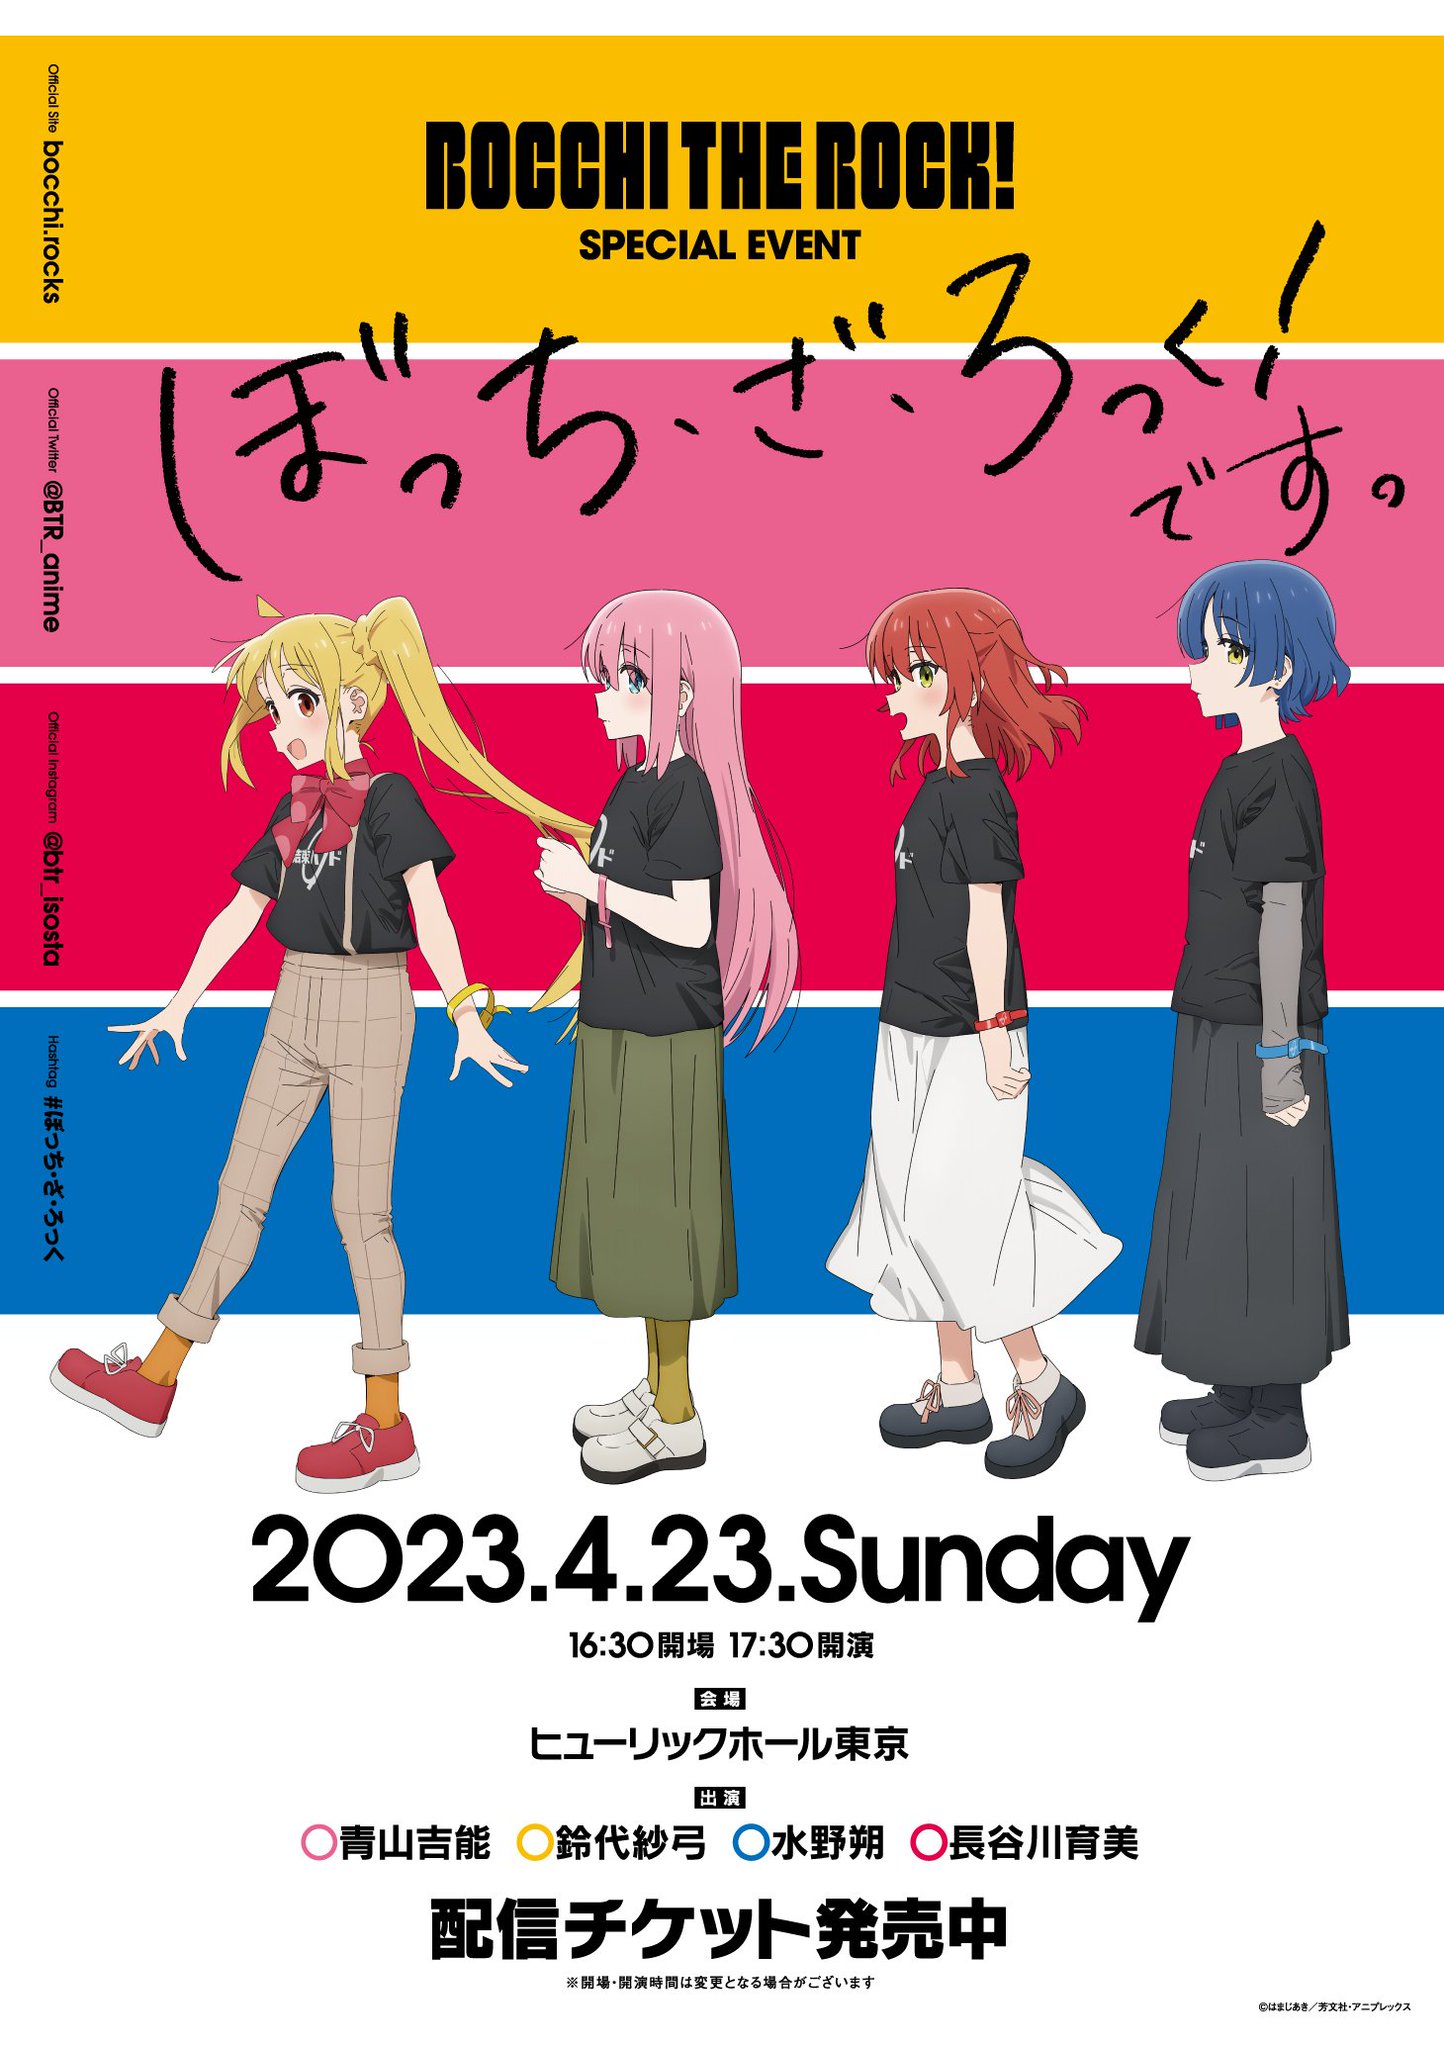 Bocchi the Rock Announces New Live Event and Single - Anime Corner